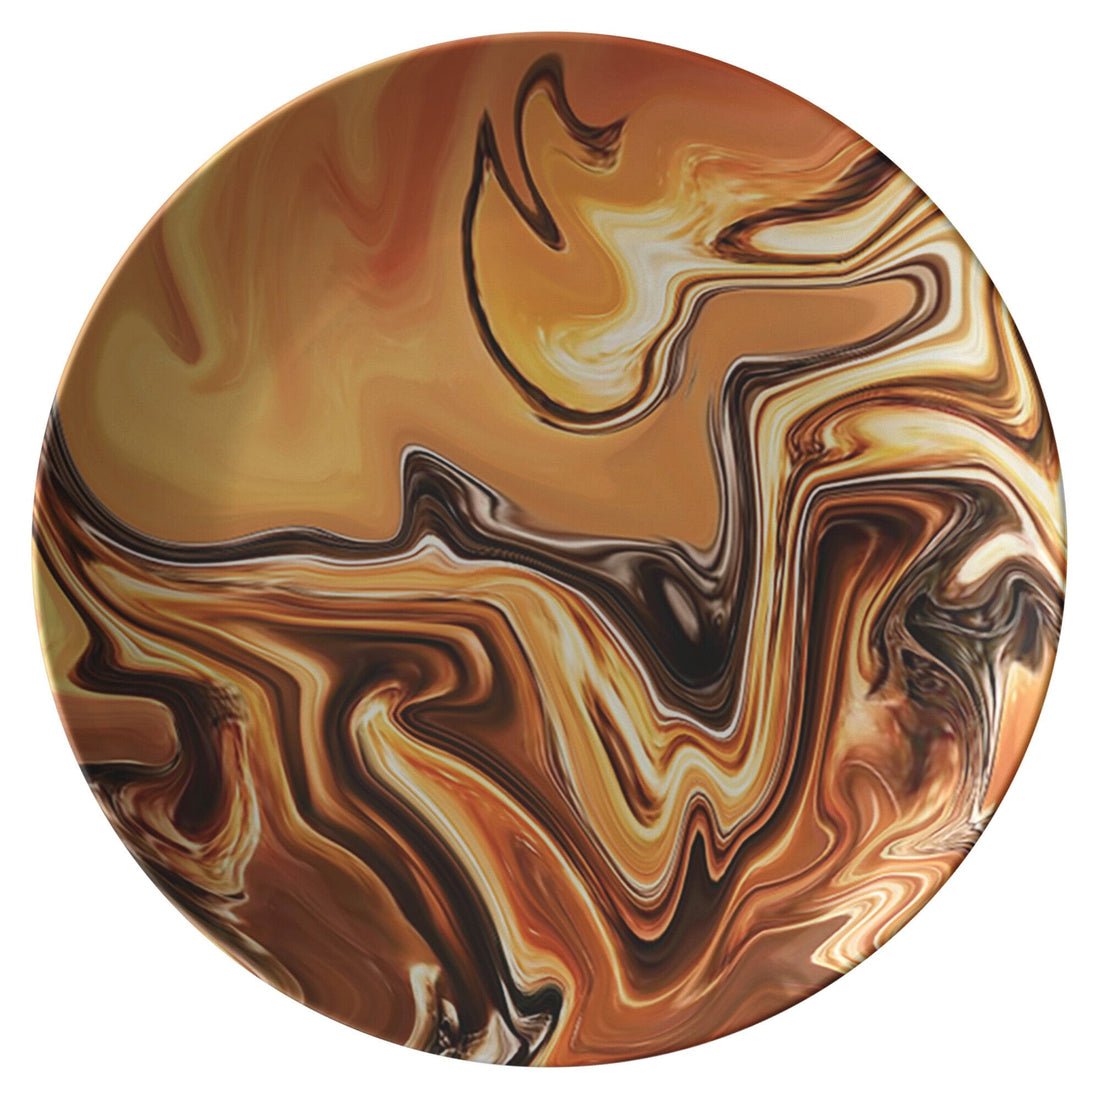 Kate McEnroe New York Dinner Plate in Exotic Liquid Gold Marble PrintPlates9820SINGLE